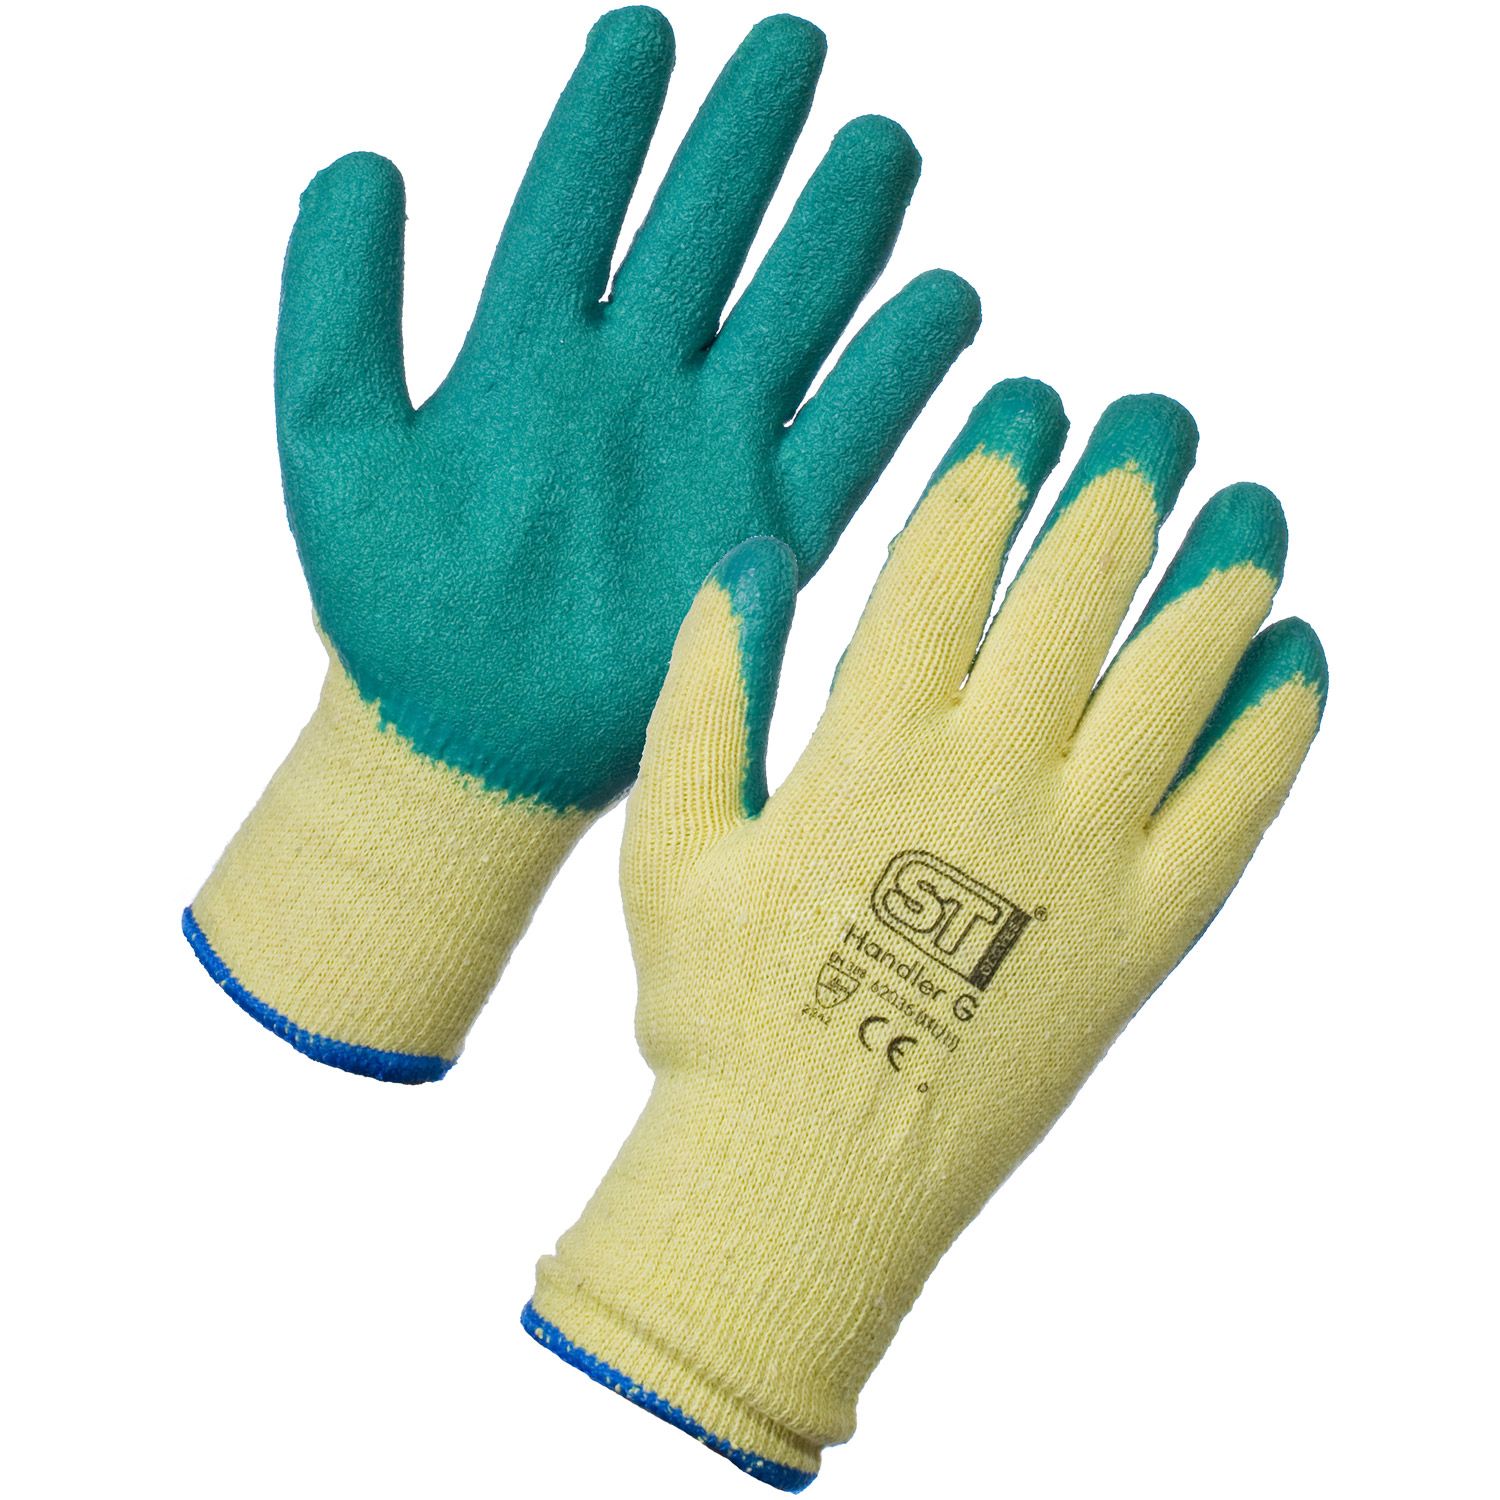 General Handler glove Latex coated (Green) Sz XXL - Pk/12prs